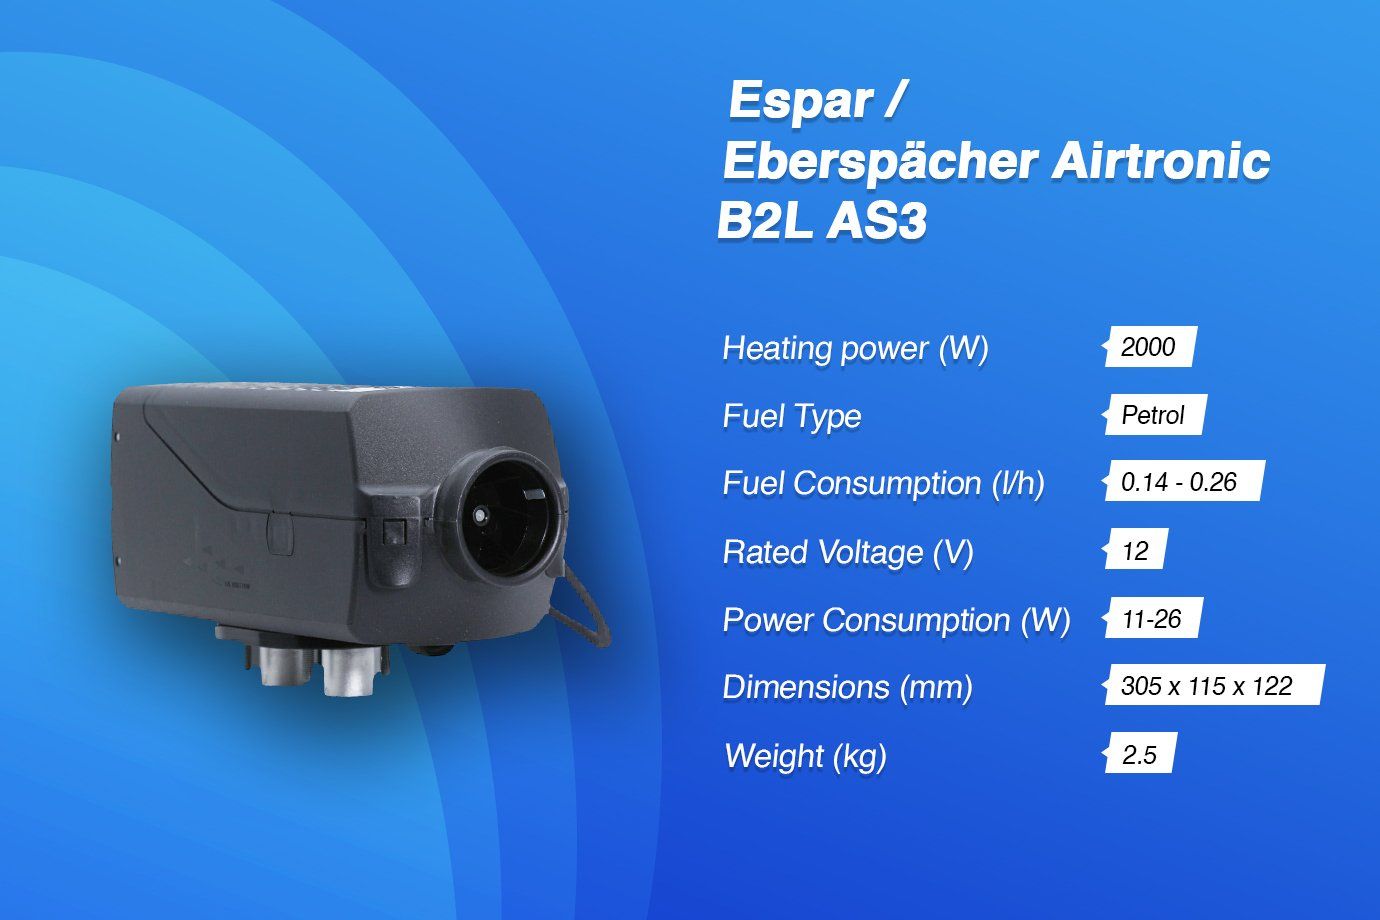 Eberspaecher Espar Airtronic B2L AS3 Specifications